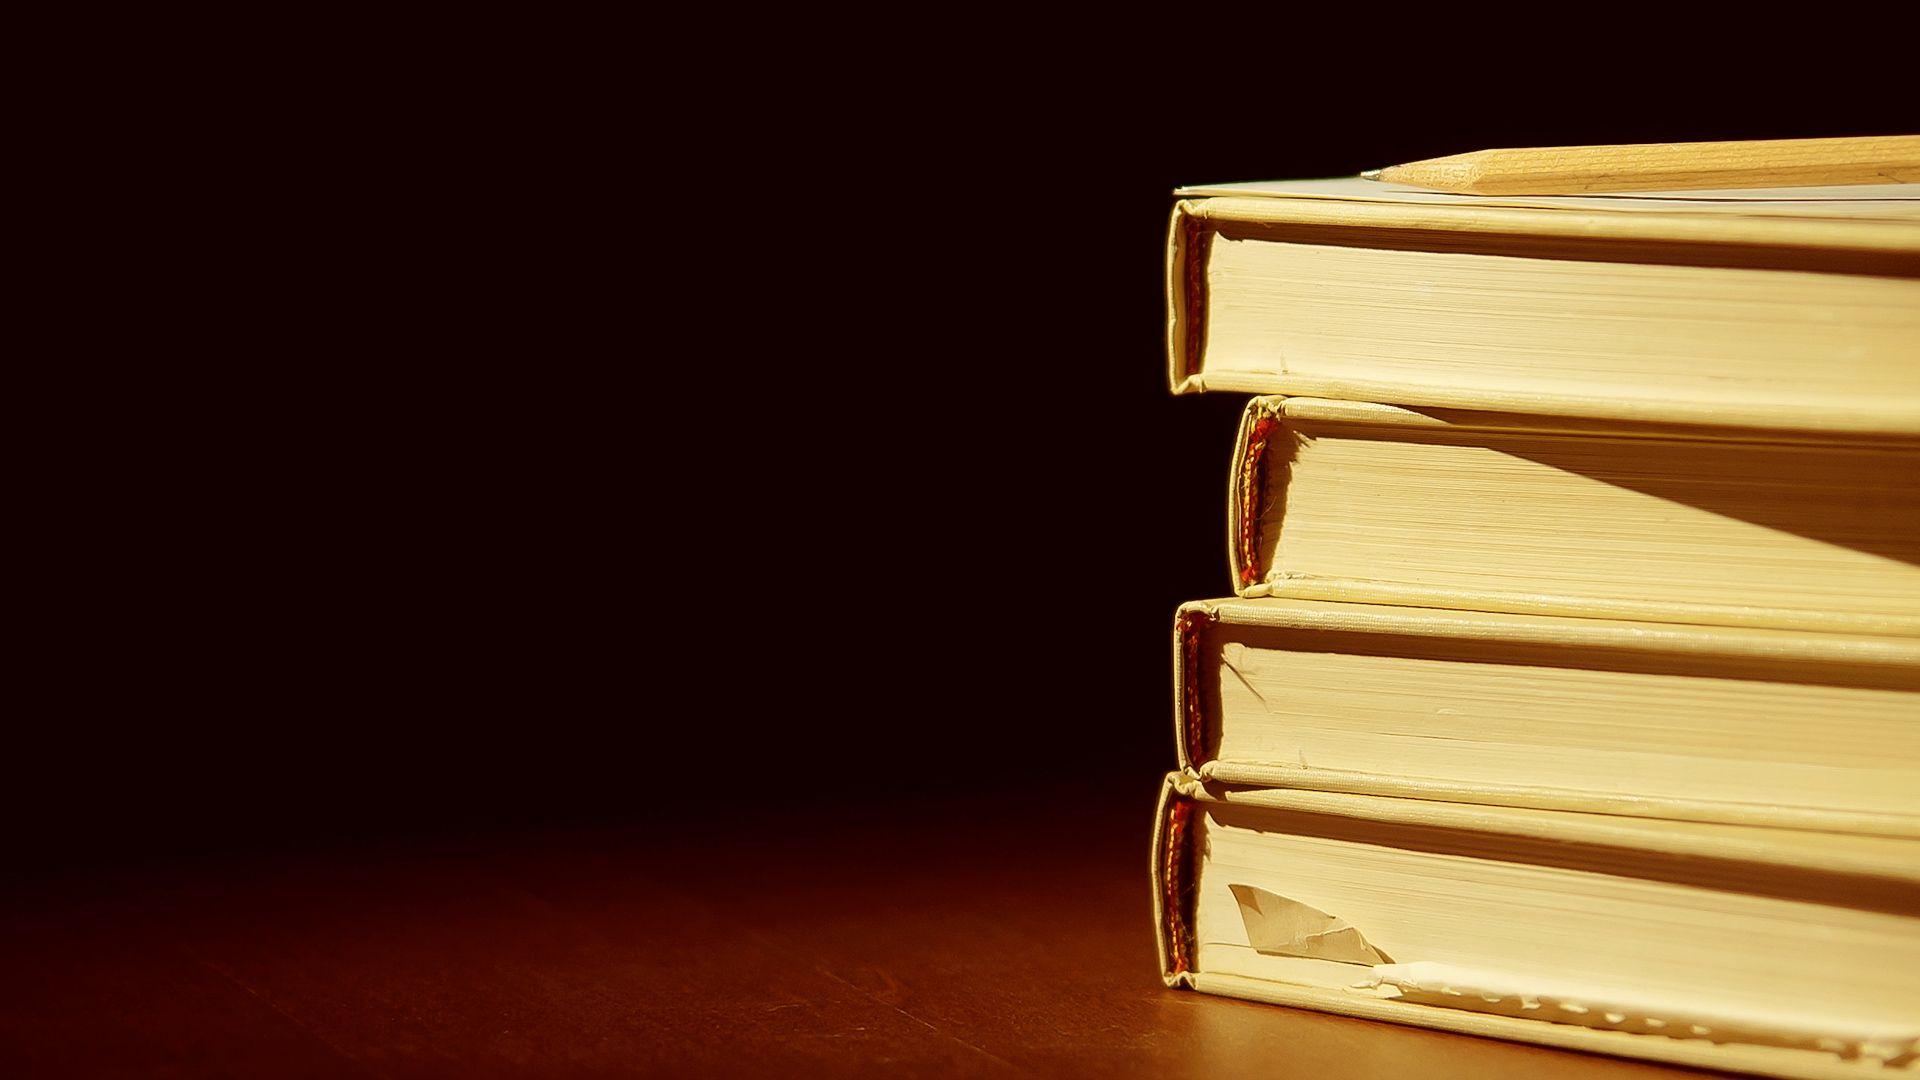 2000 Free Old Books  Books Images  Pixabay